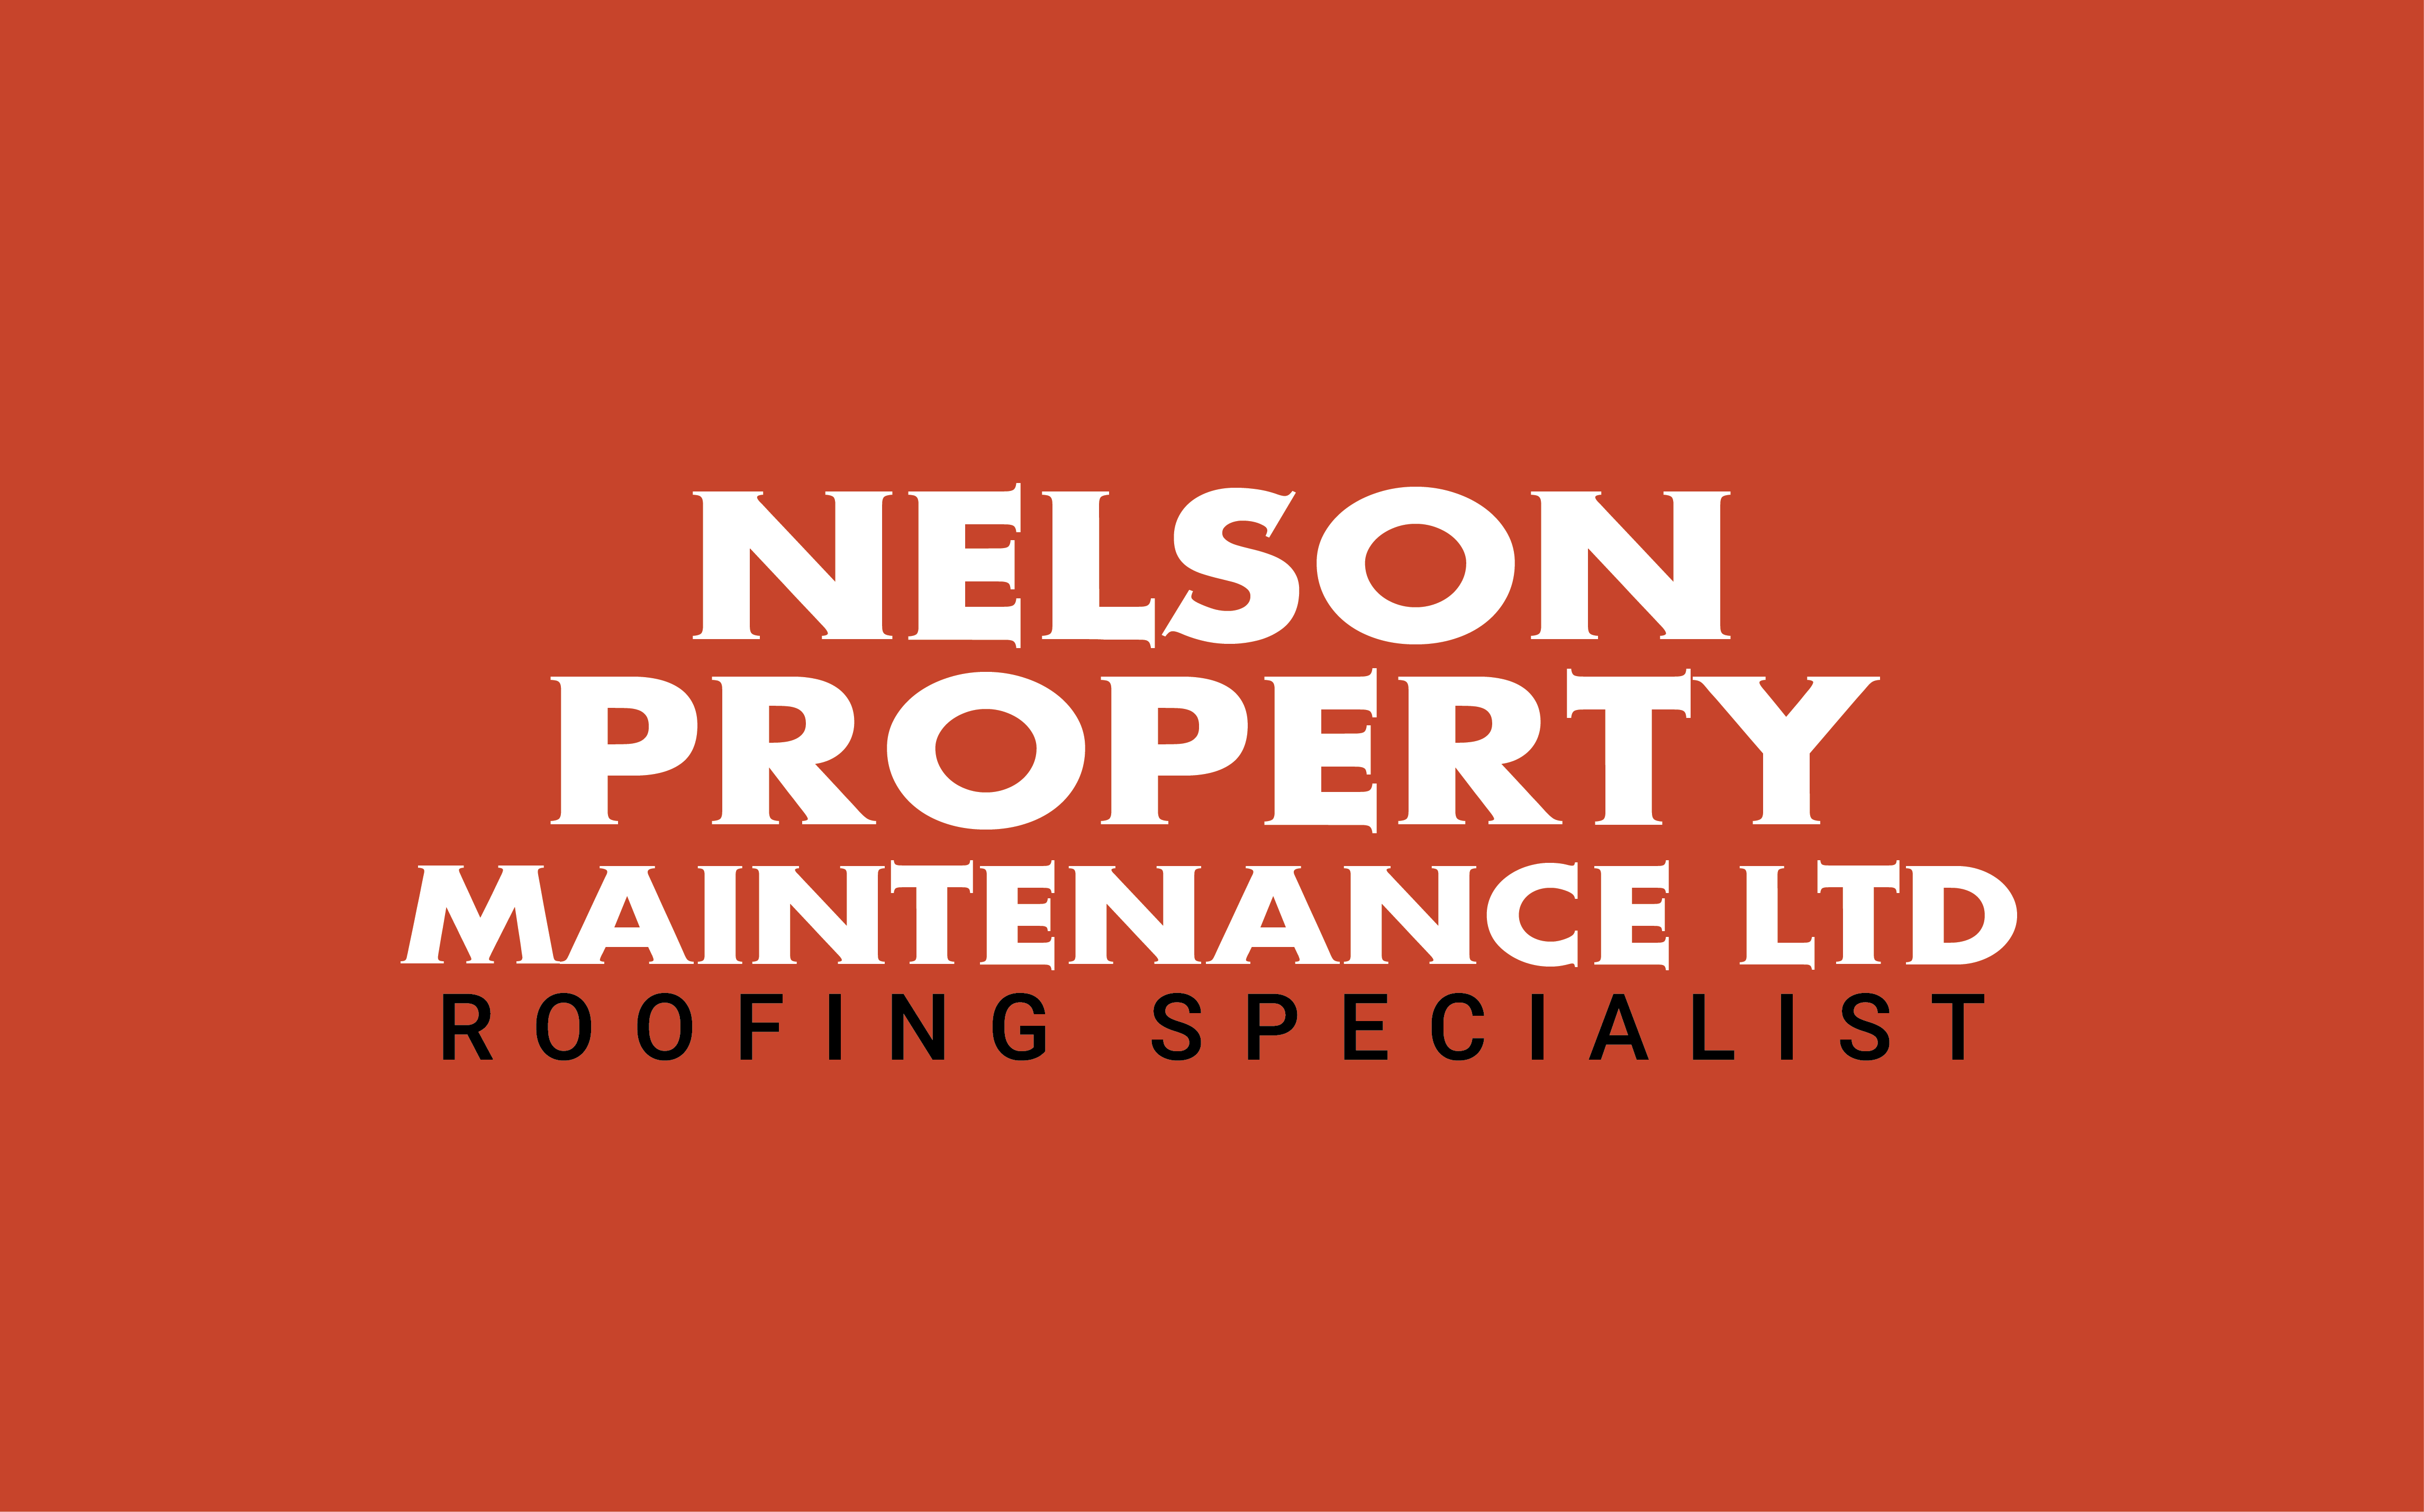 Nelson Property Maintenance Ltd